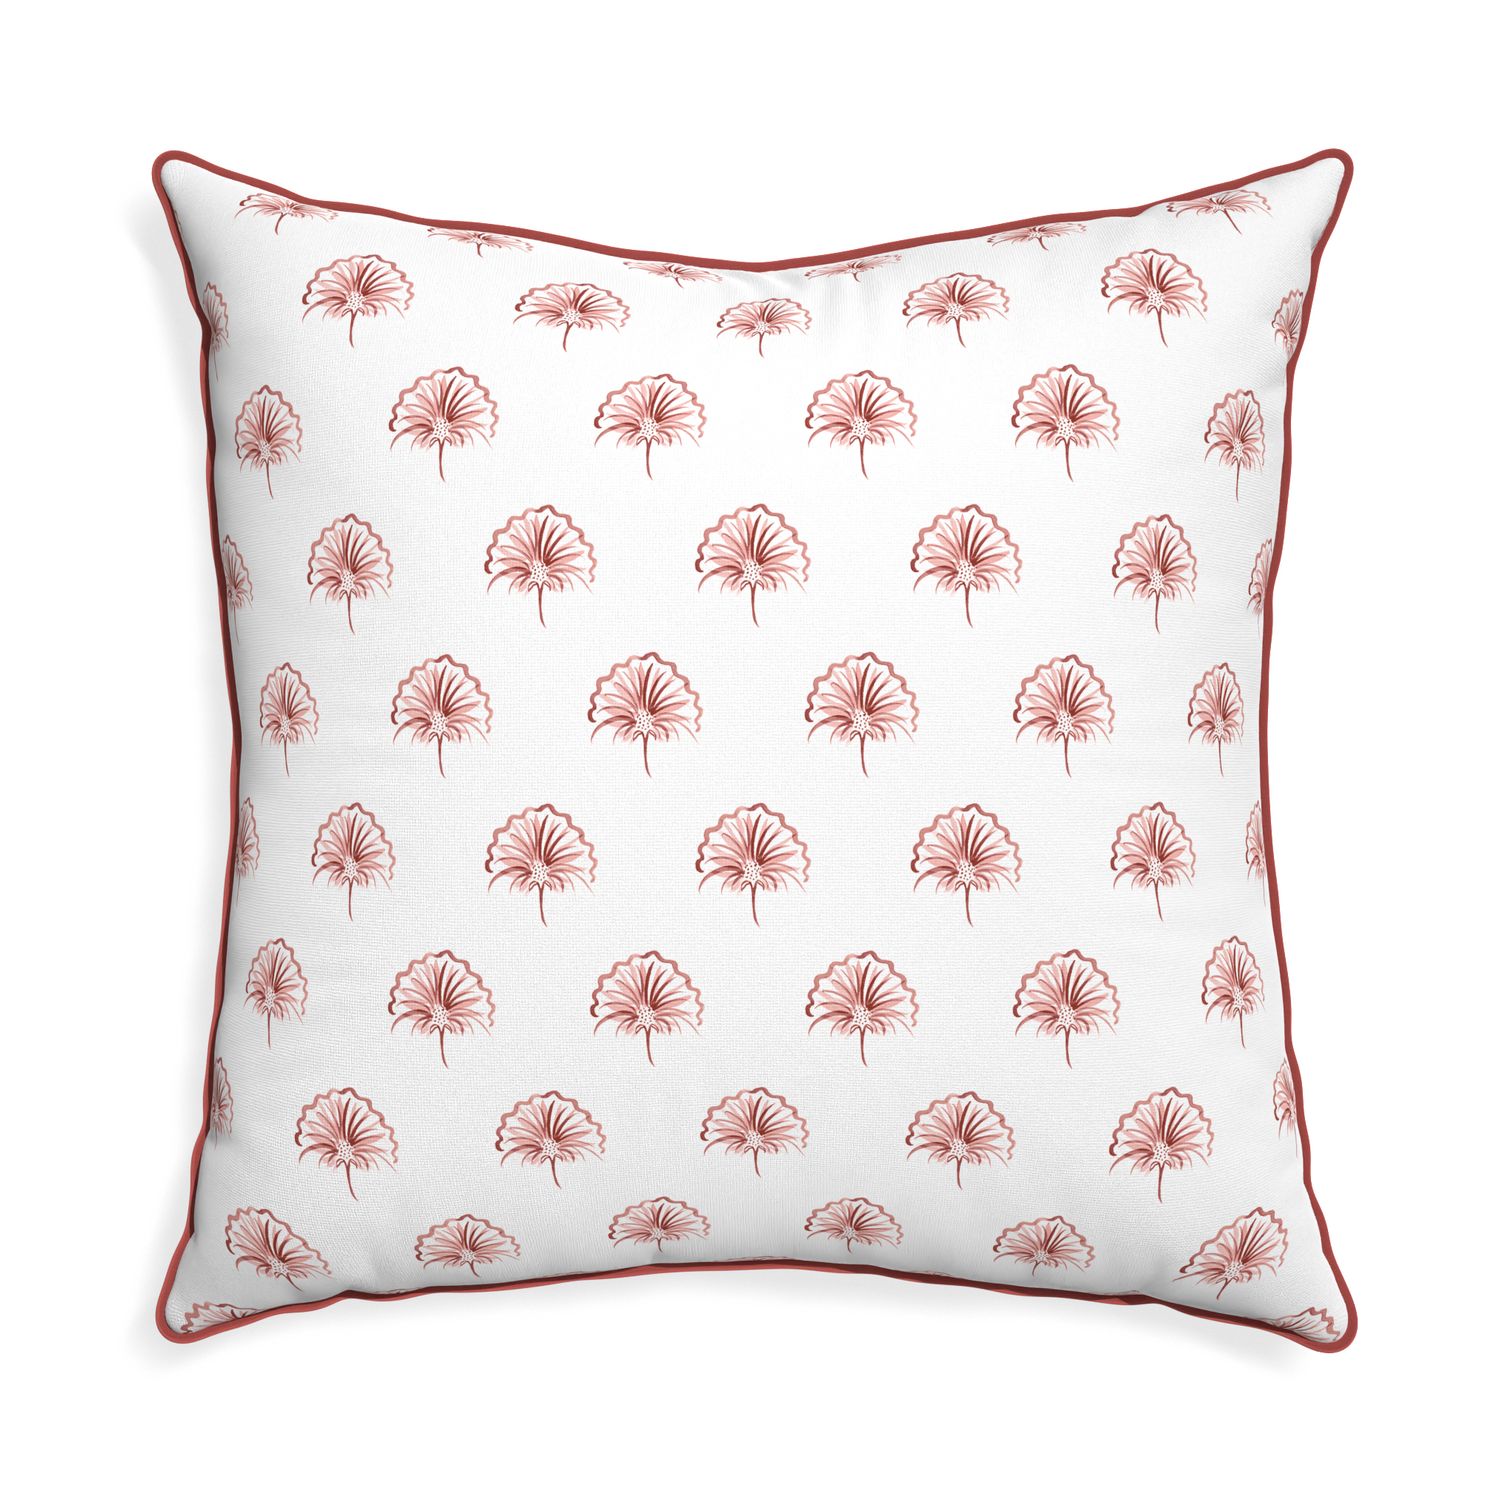 Euro-sham penelope rose custom pillow with c piping on white background